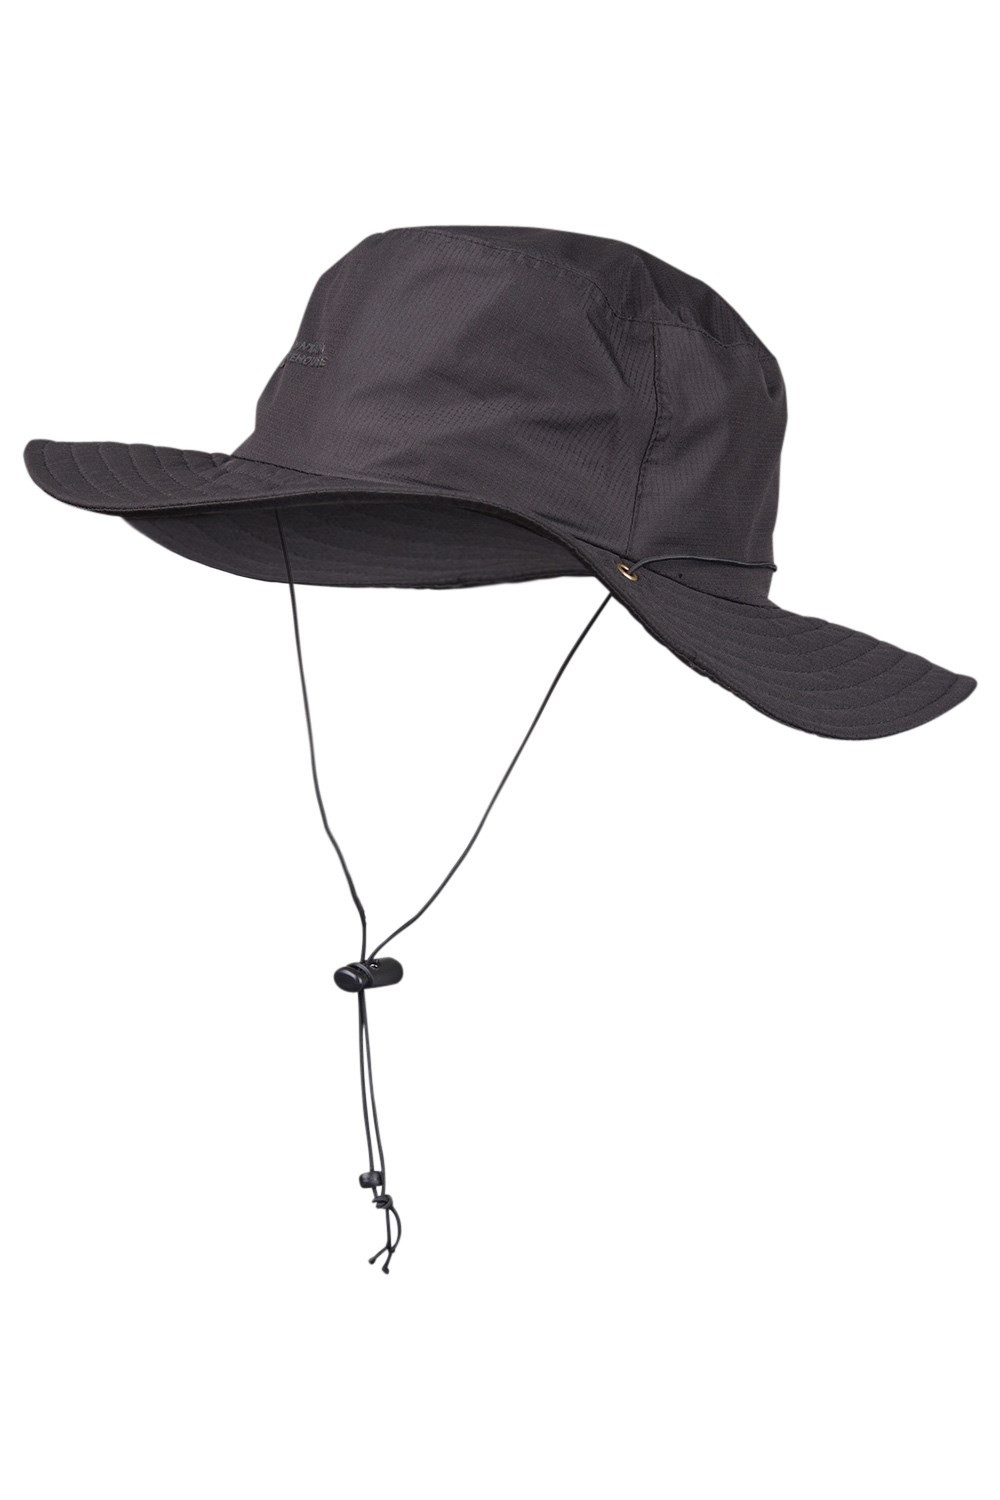 SUNDERLAND Men's Waterproof Wide Brim Bucket Hat in Black, Size Small